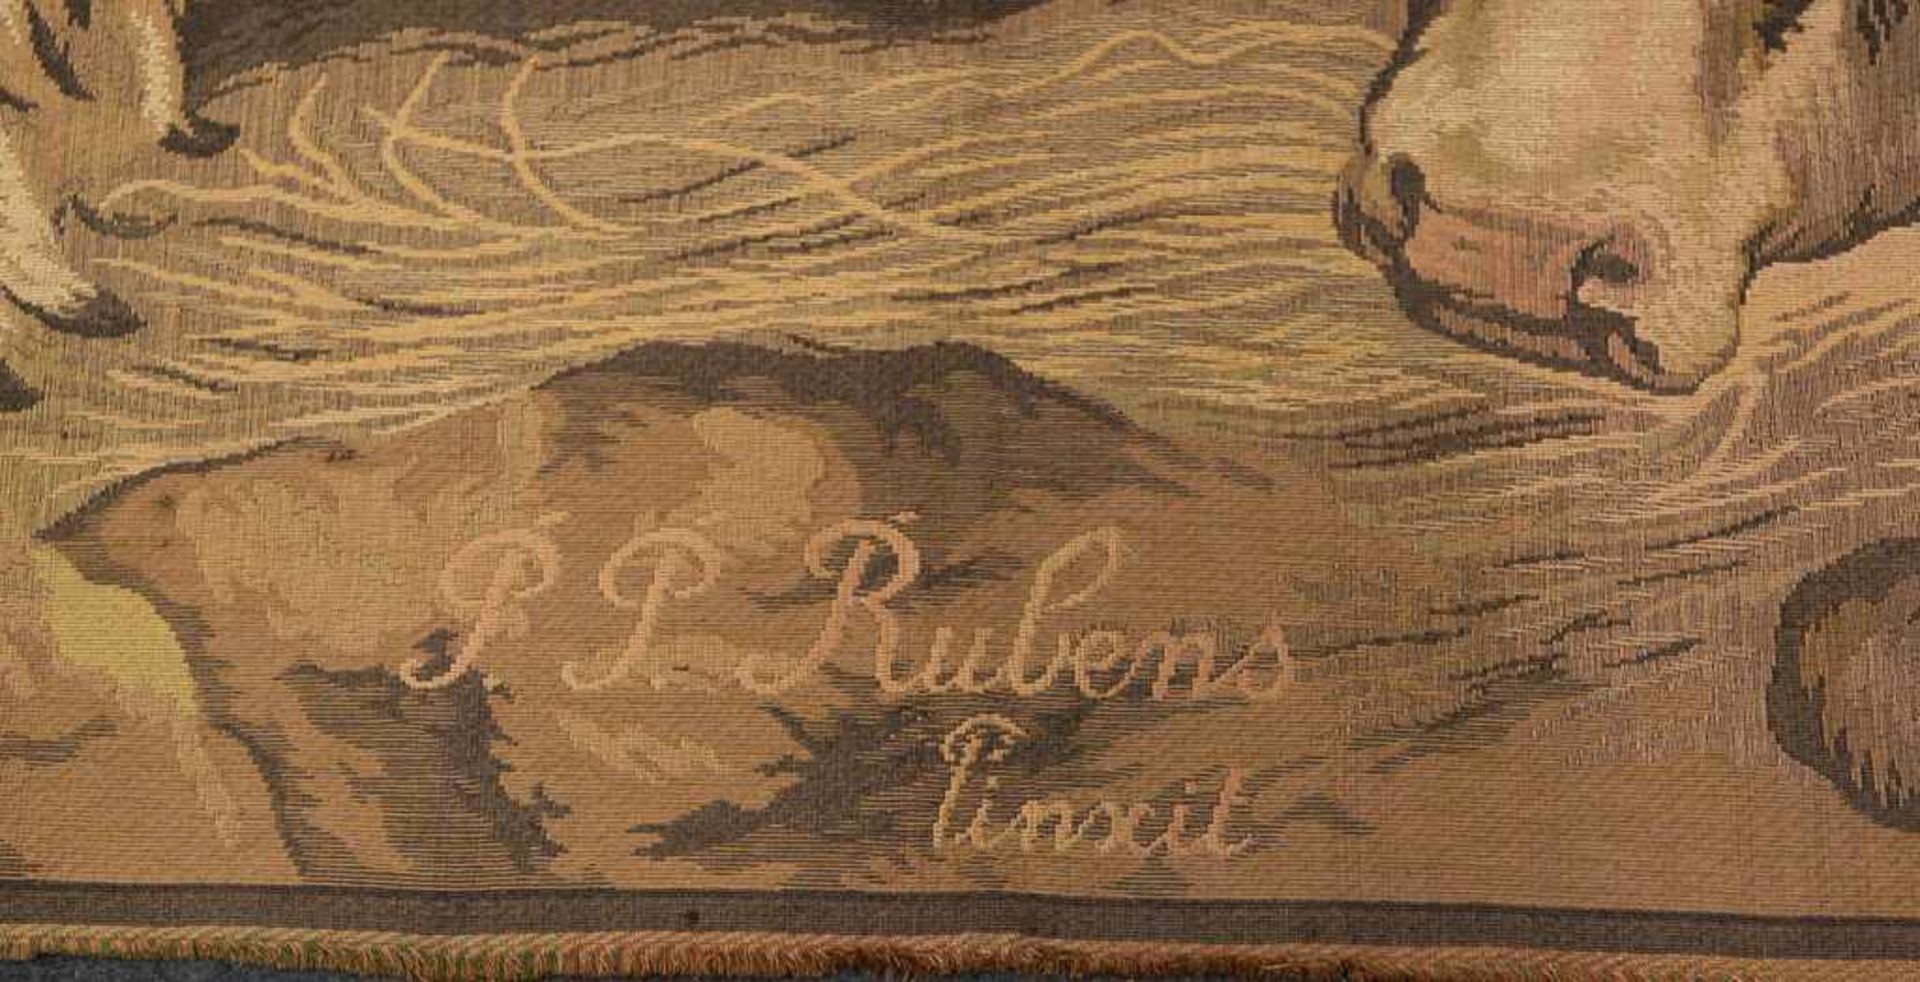 Tapestry Rubens - Image 3 of 9